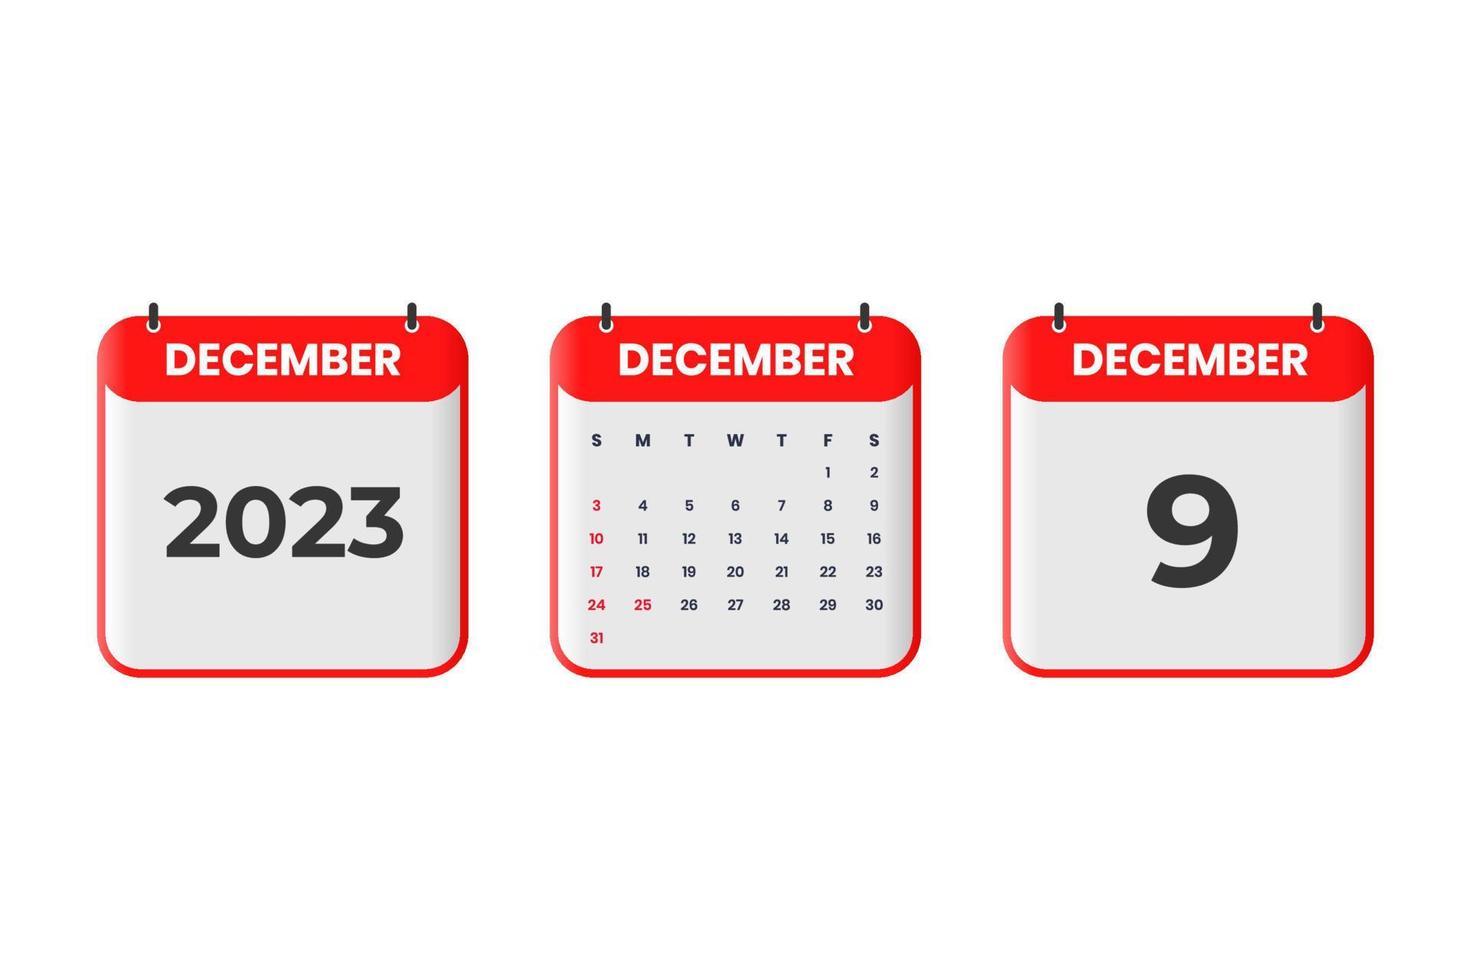 Dezember 2023 Kalenderdesign. 9. Dezember 2023 Kalendersymbol für Zeitplan, Termin, wichtiges Datumskonzept vektor